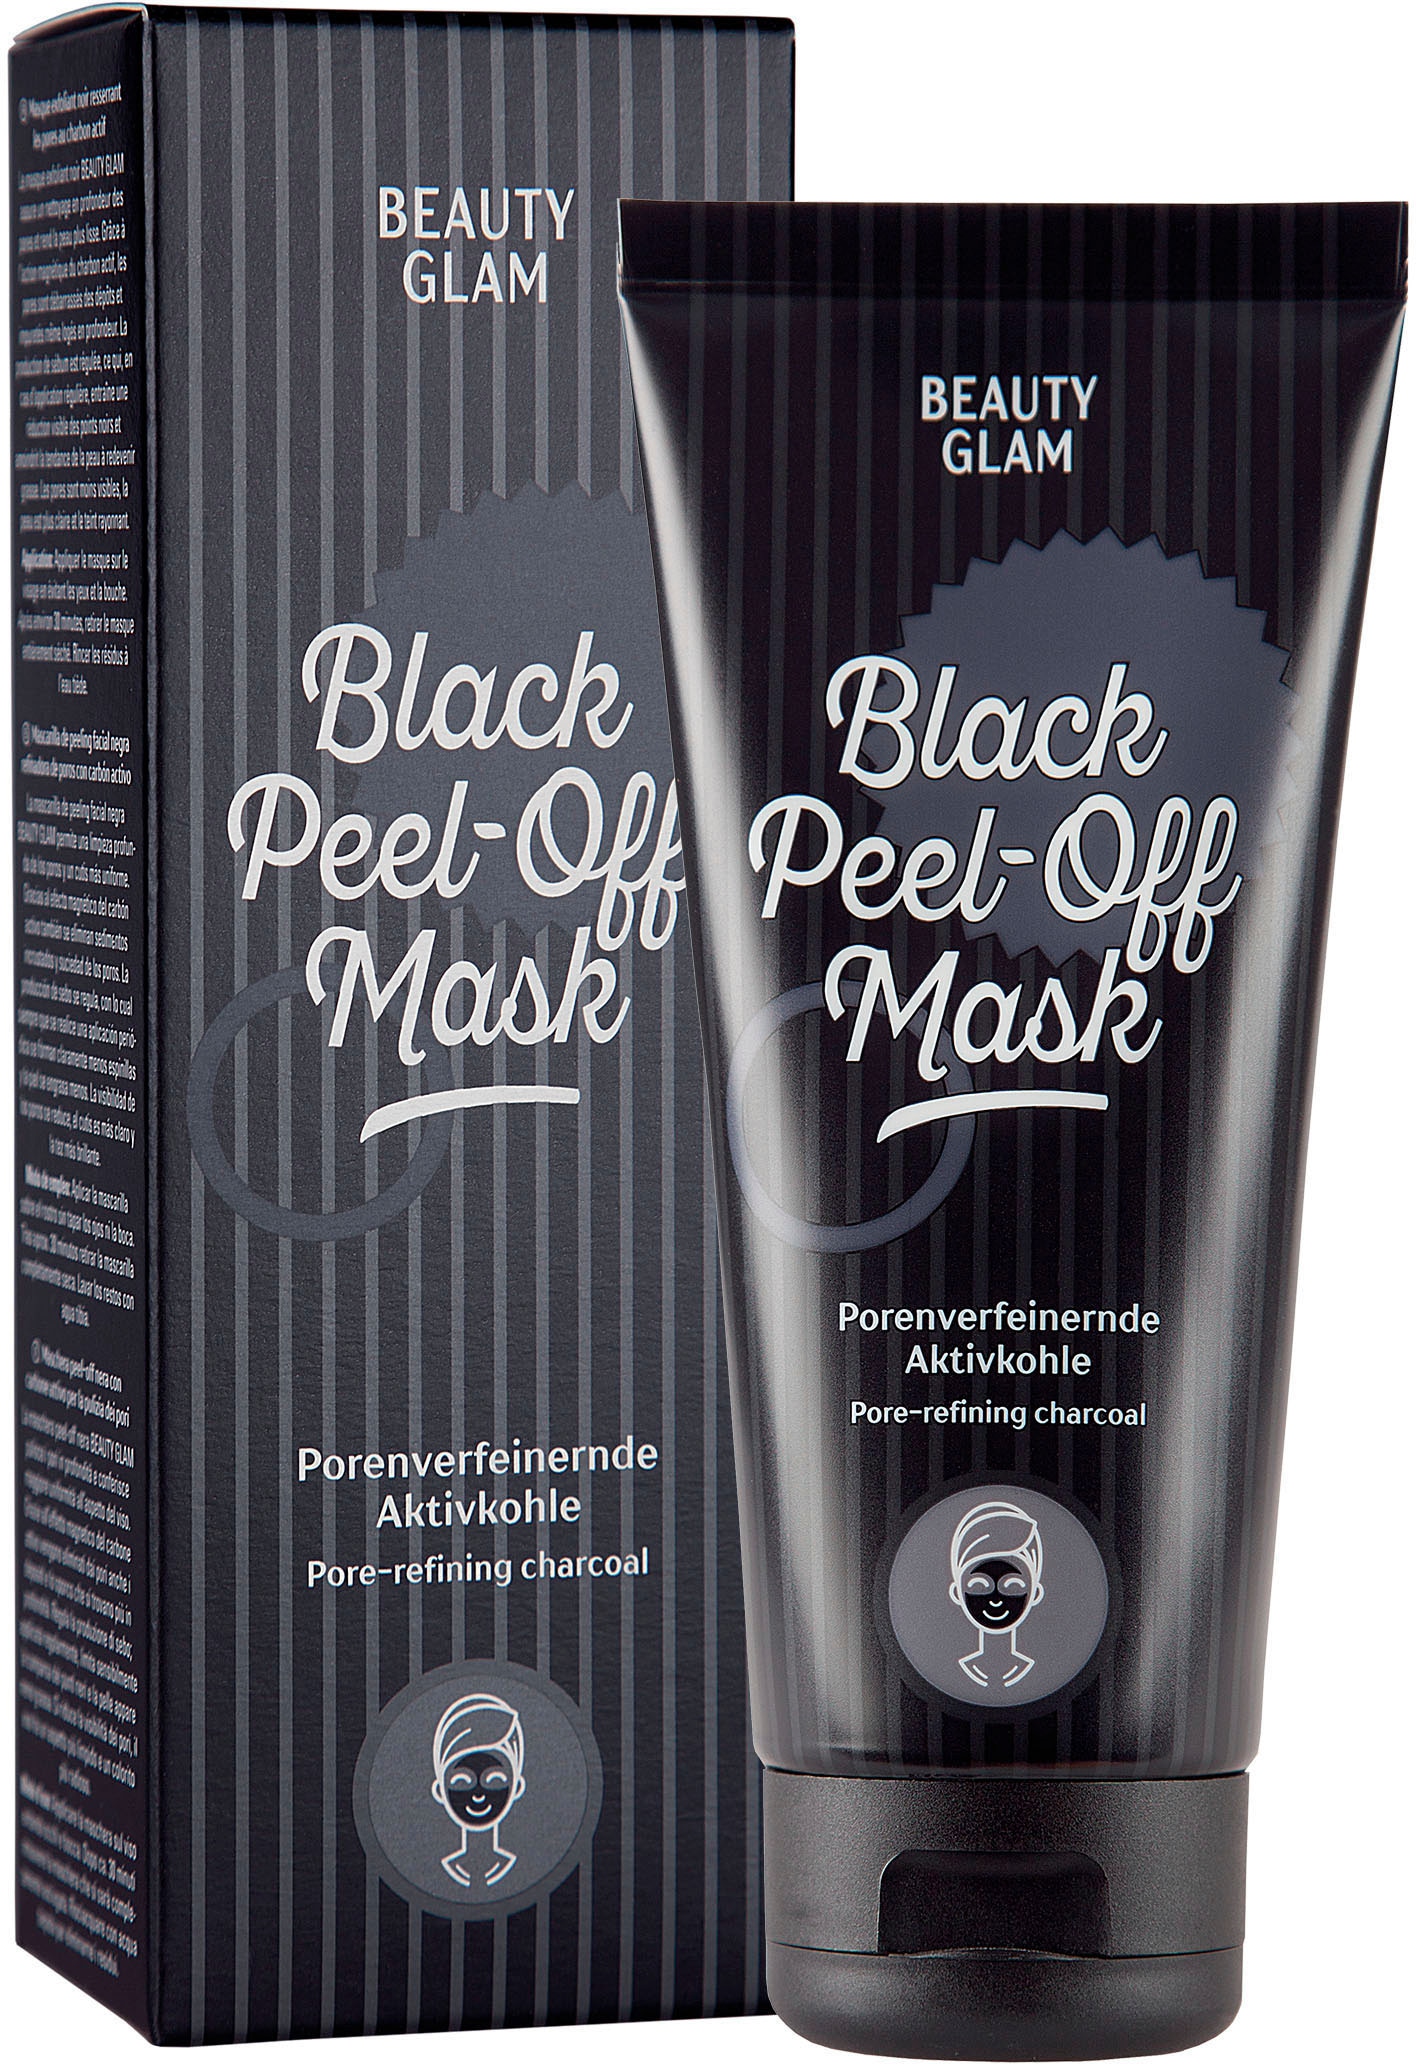 BEAUTY GLAM Gesichtsmaske UNIVERSAL kaufen »Beauty Mask« | Glam Black Peel Off